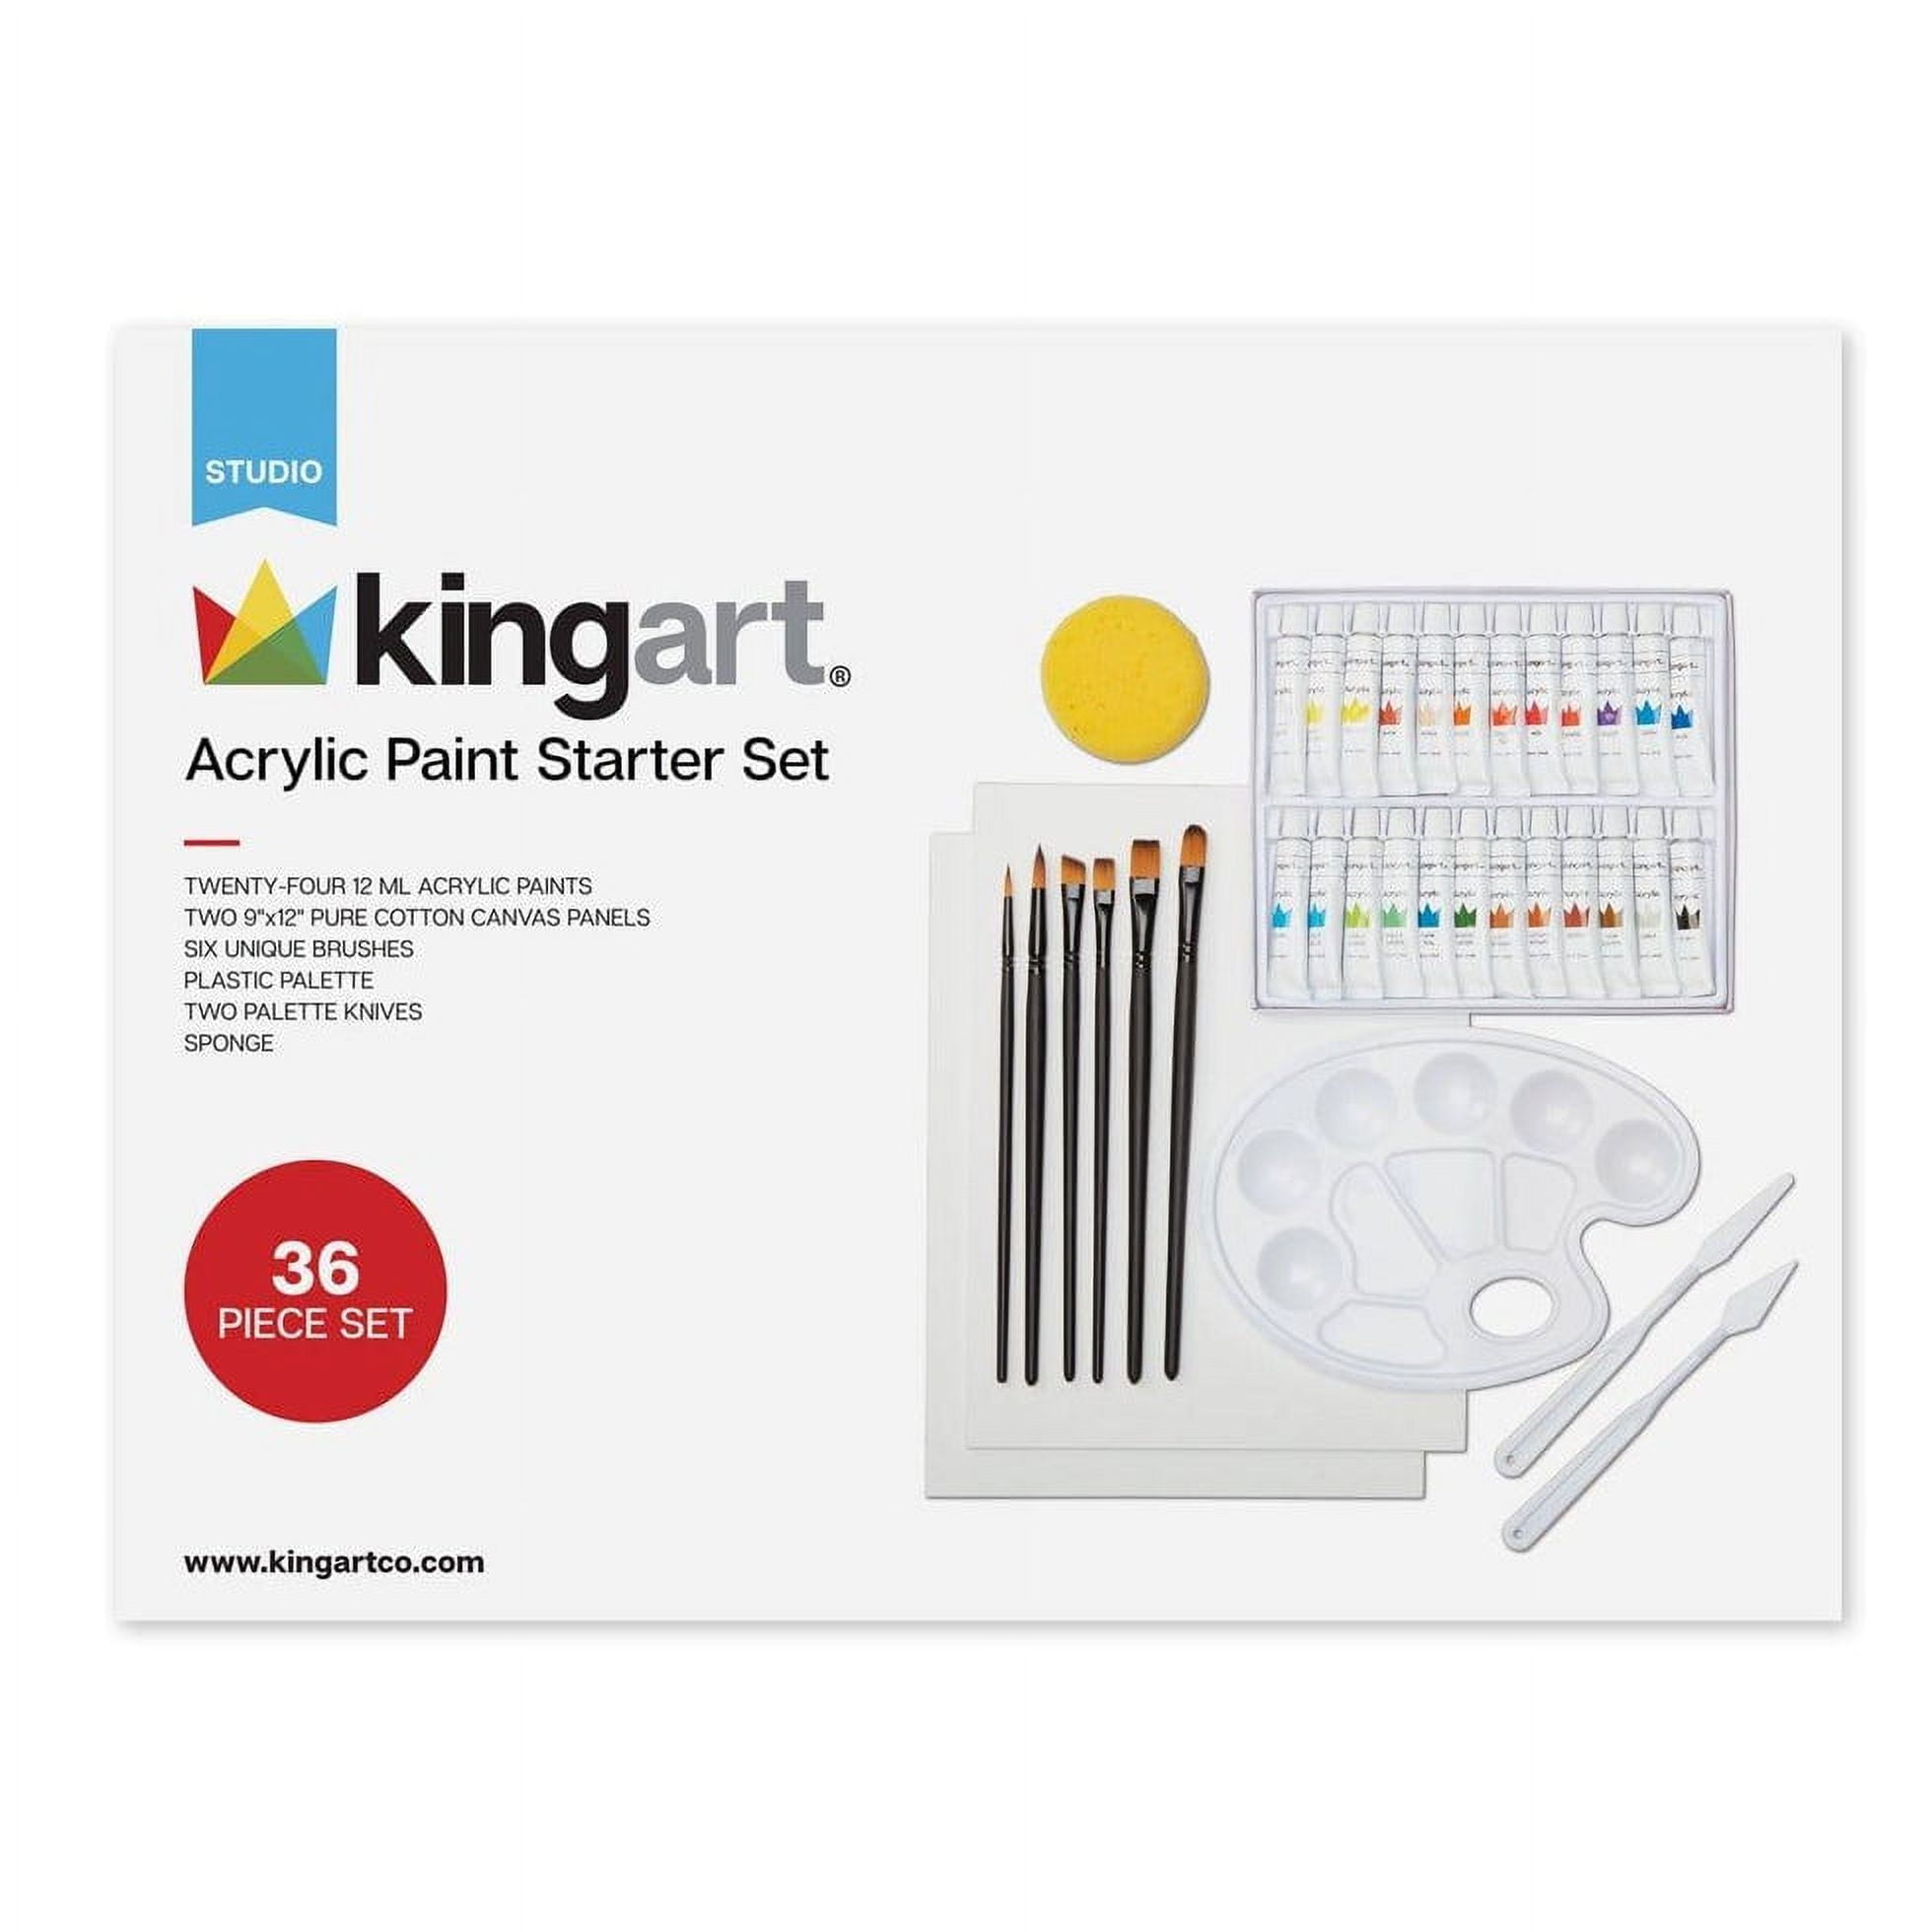 KINGART® Studio Sketch and Drawing Manikin Art Set, 13 Pcs.